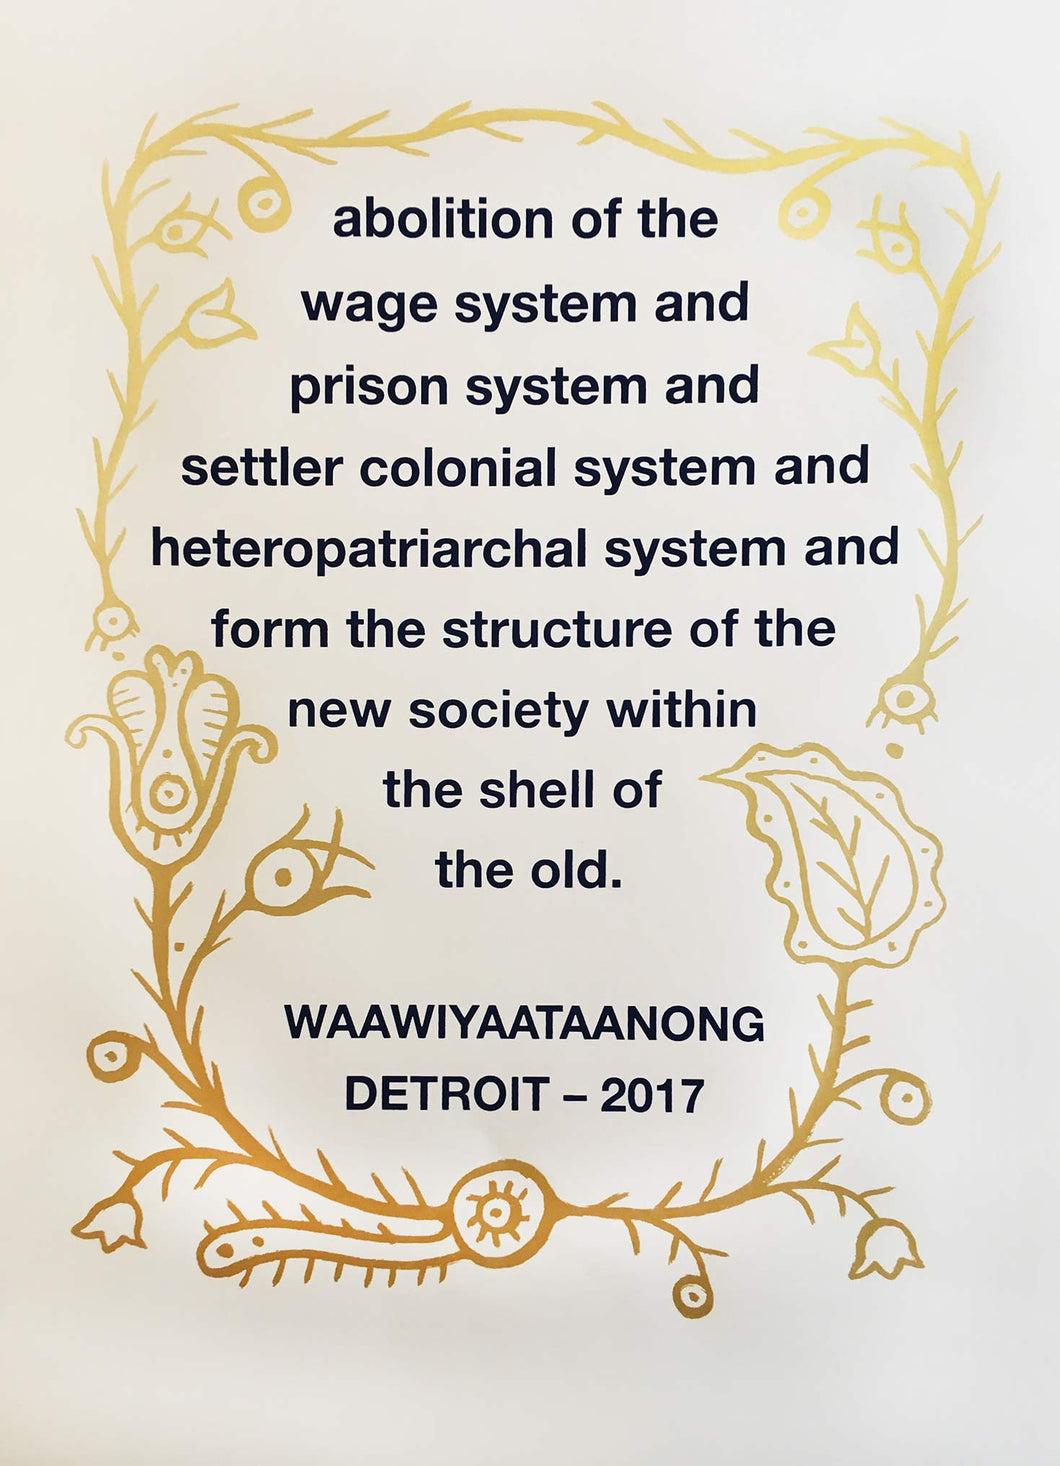 Waawiyaataanong Systems Abolition Poster